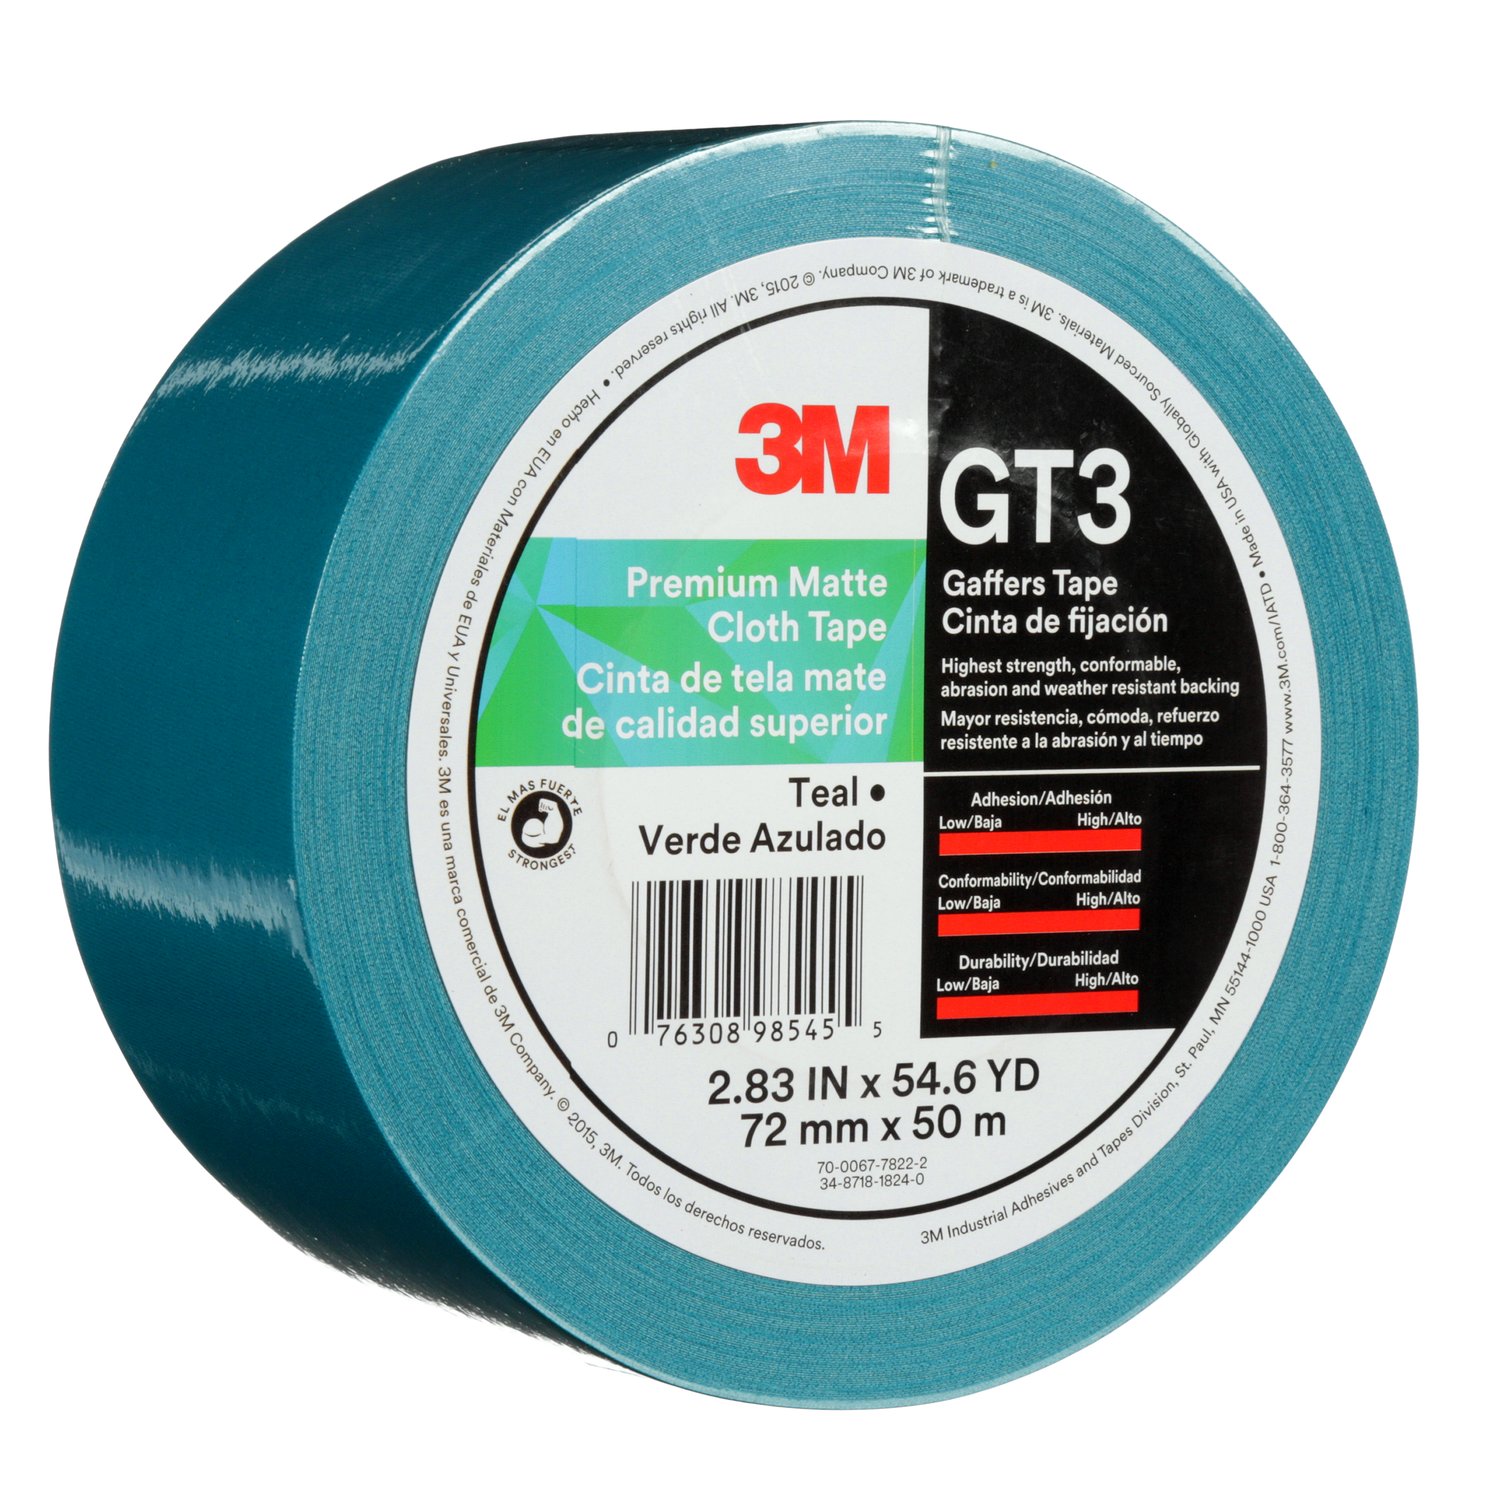 7010375528 - 3M Premium Matte Cloth (Gaffers) Tape GT3, Teal, 72 mm x 50 m, 11 mil,
16/Case